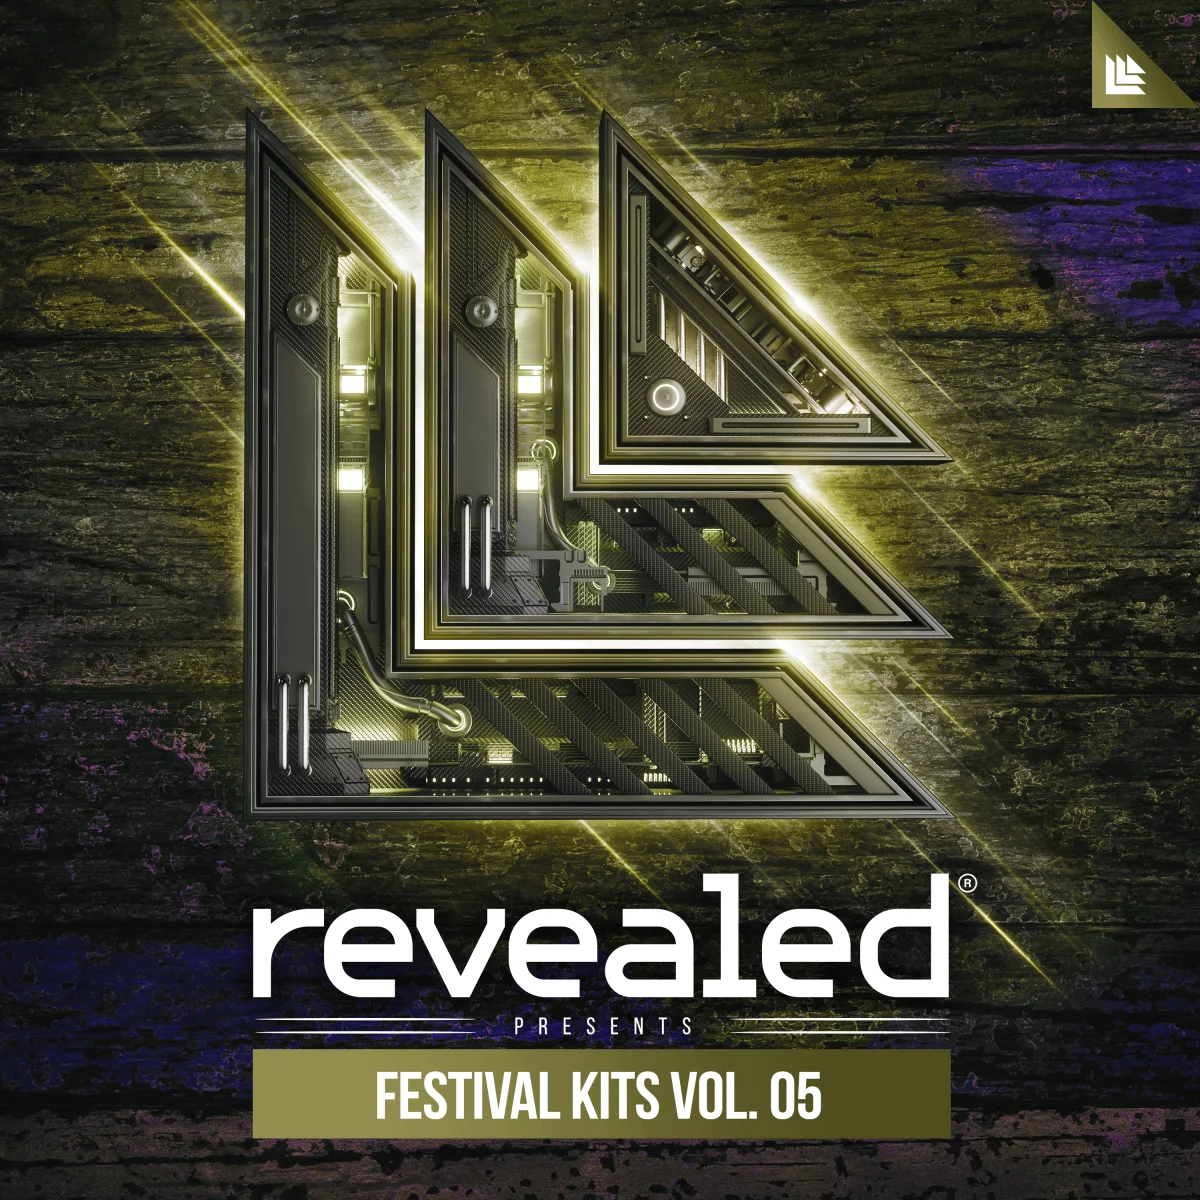 Revealed Festival Kits Vol. 5 - revealedrec⁠ 